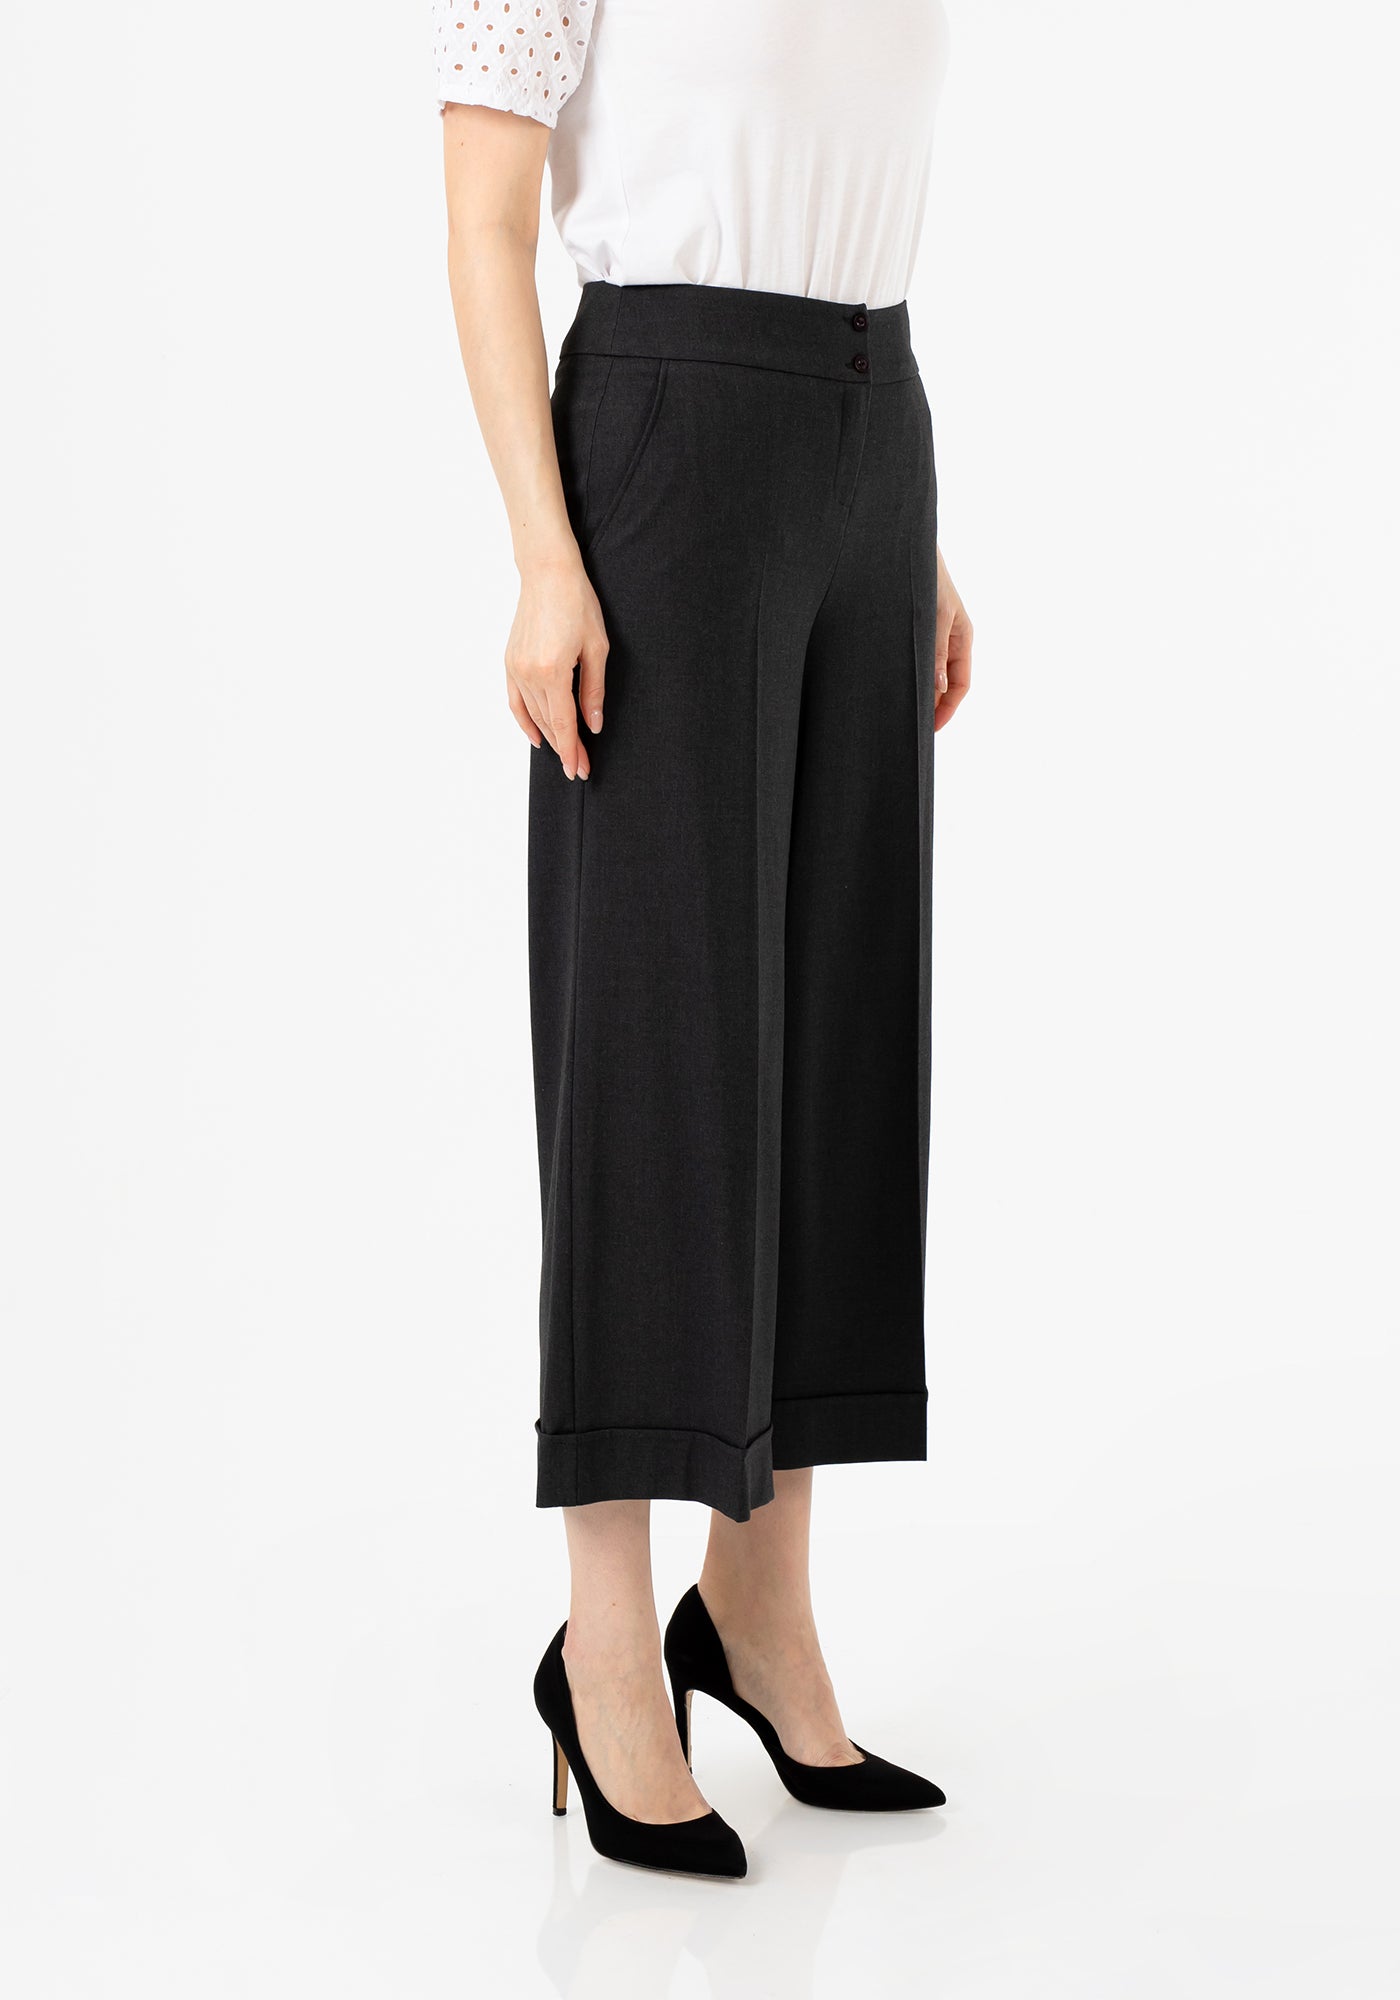 Charcoal Dress Pants for Women Wide Leg High Waist Cropped Pants G-Line